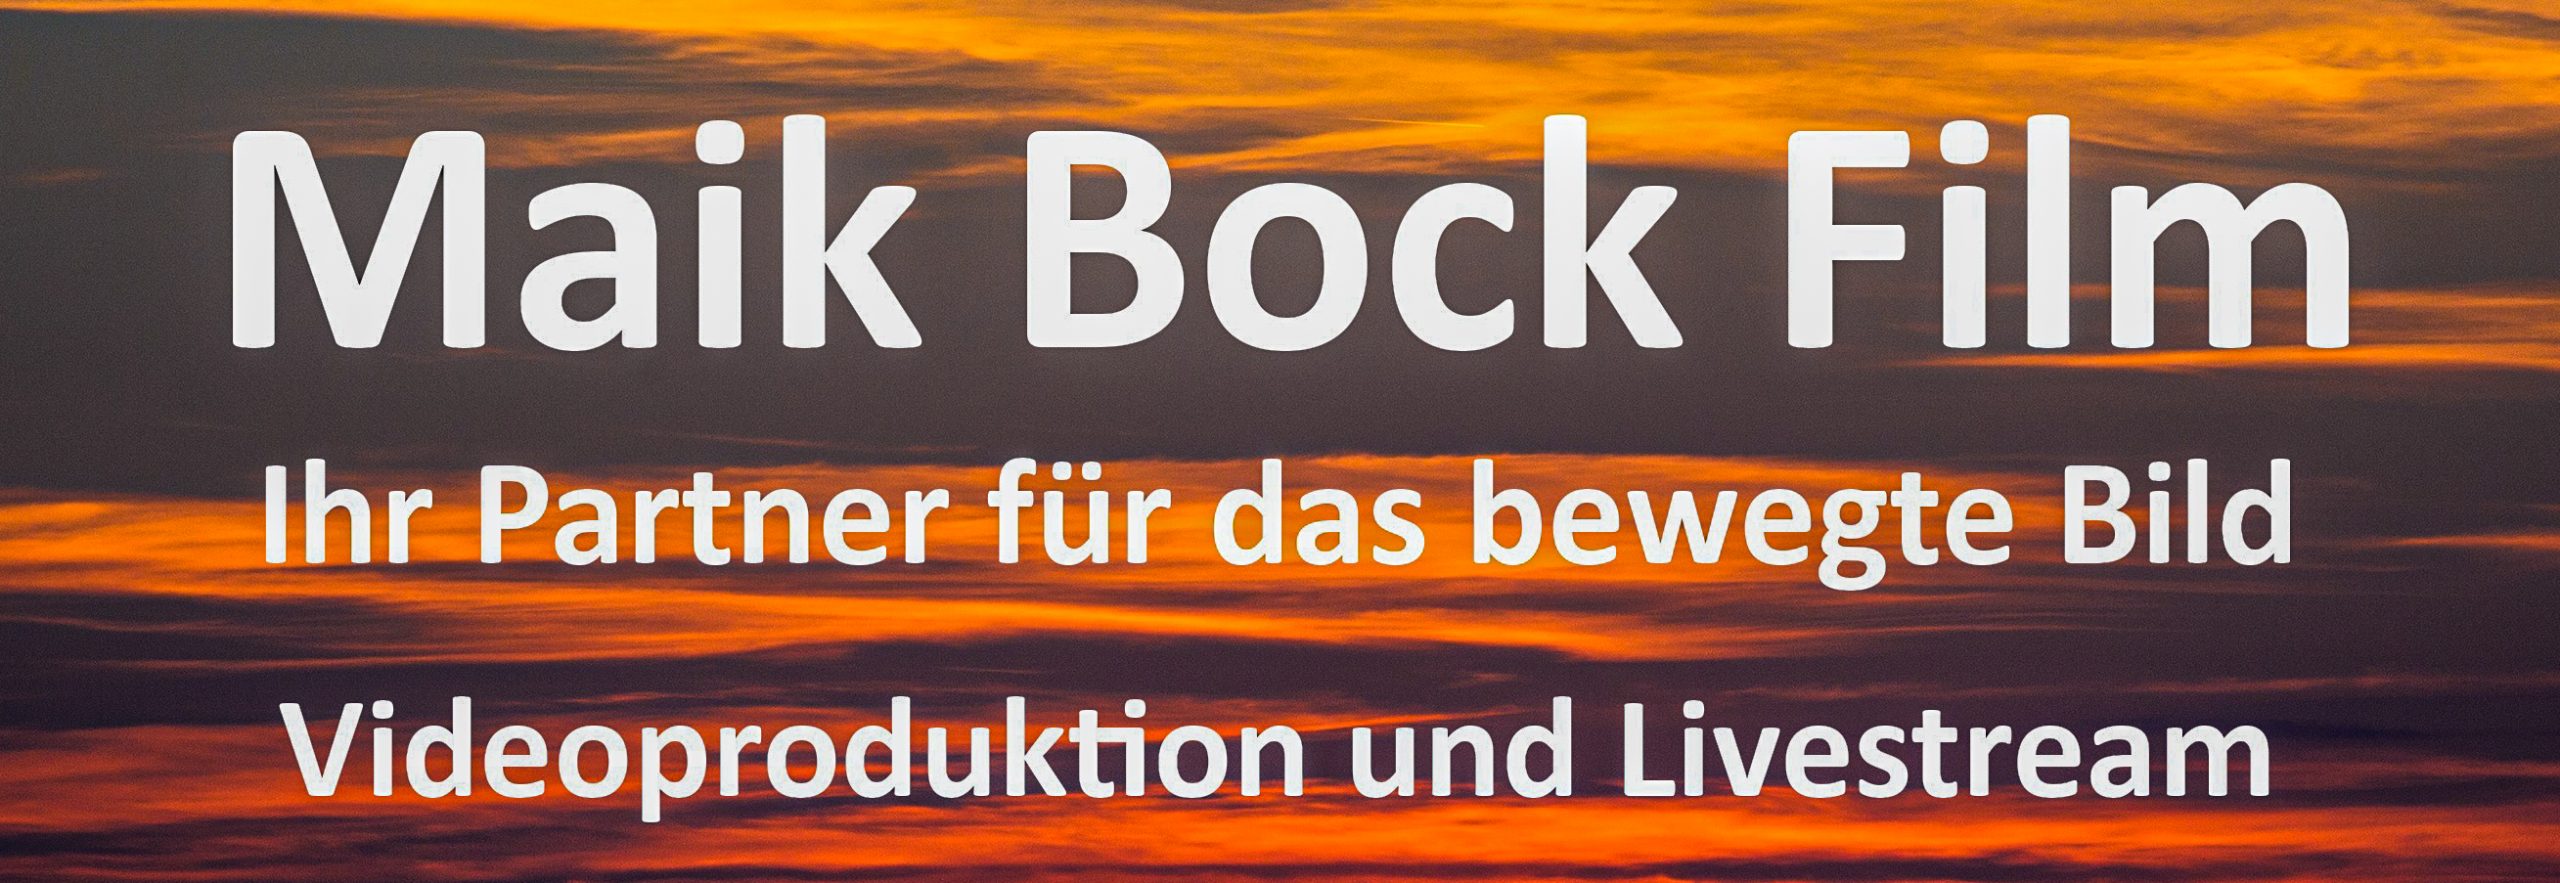 Maik Bock Film Logo